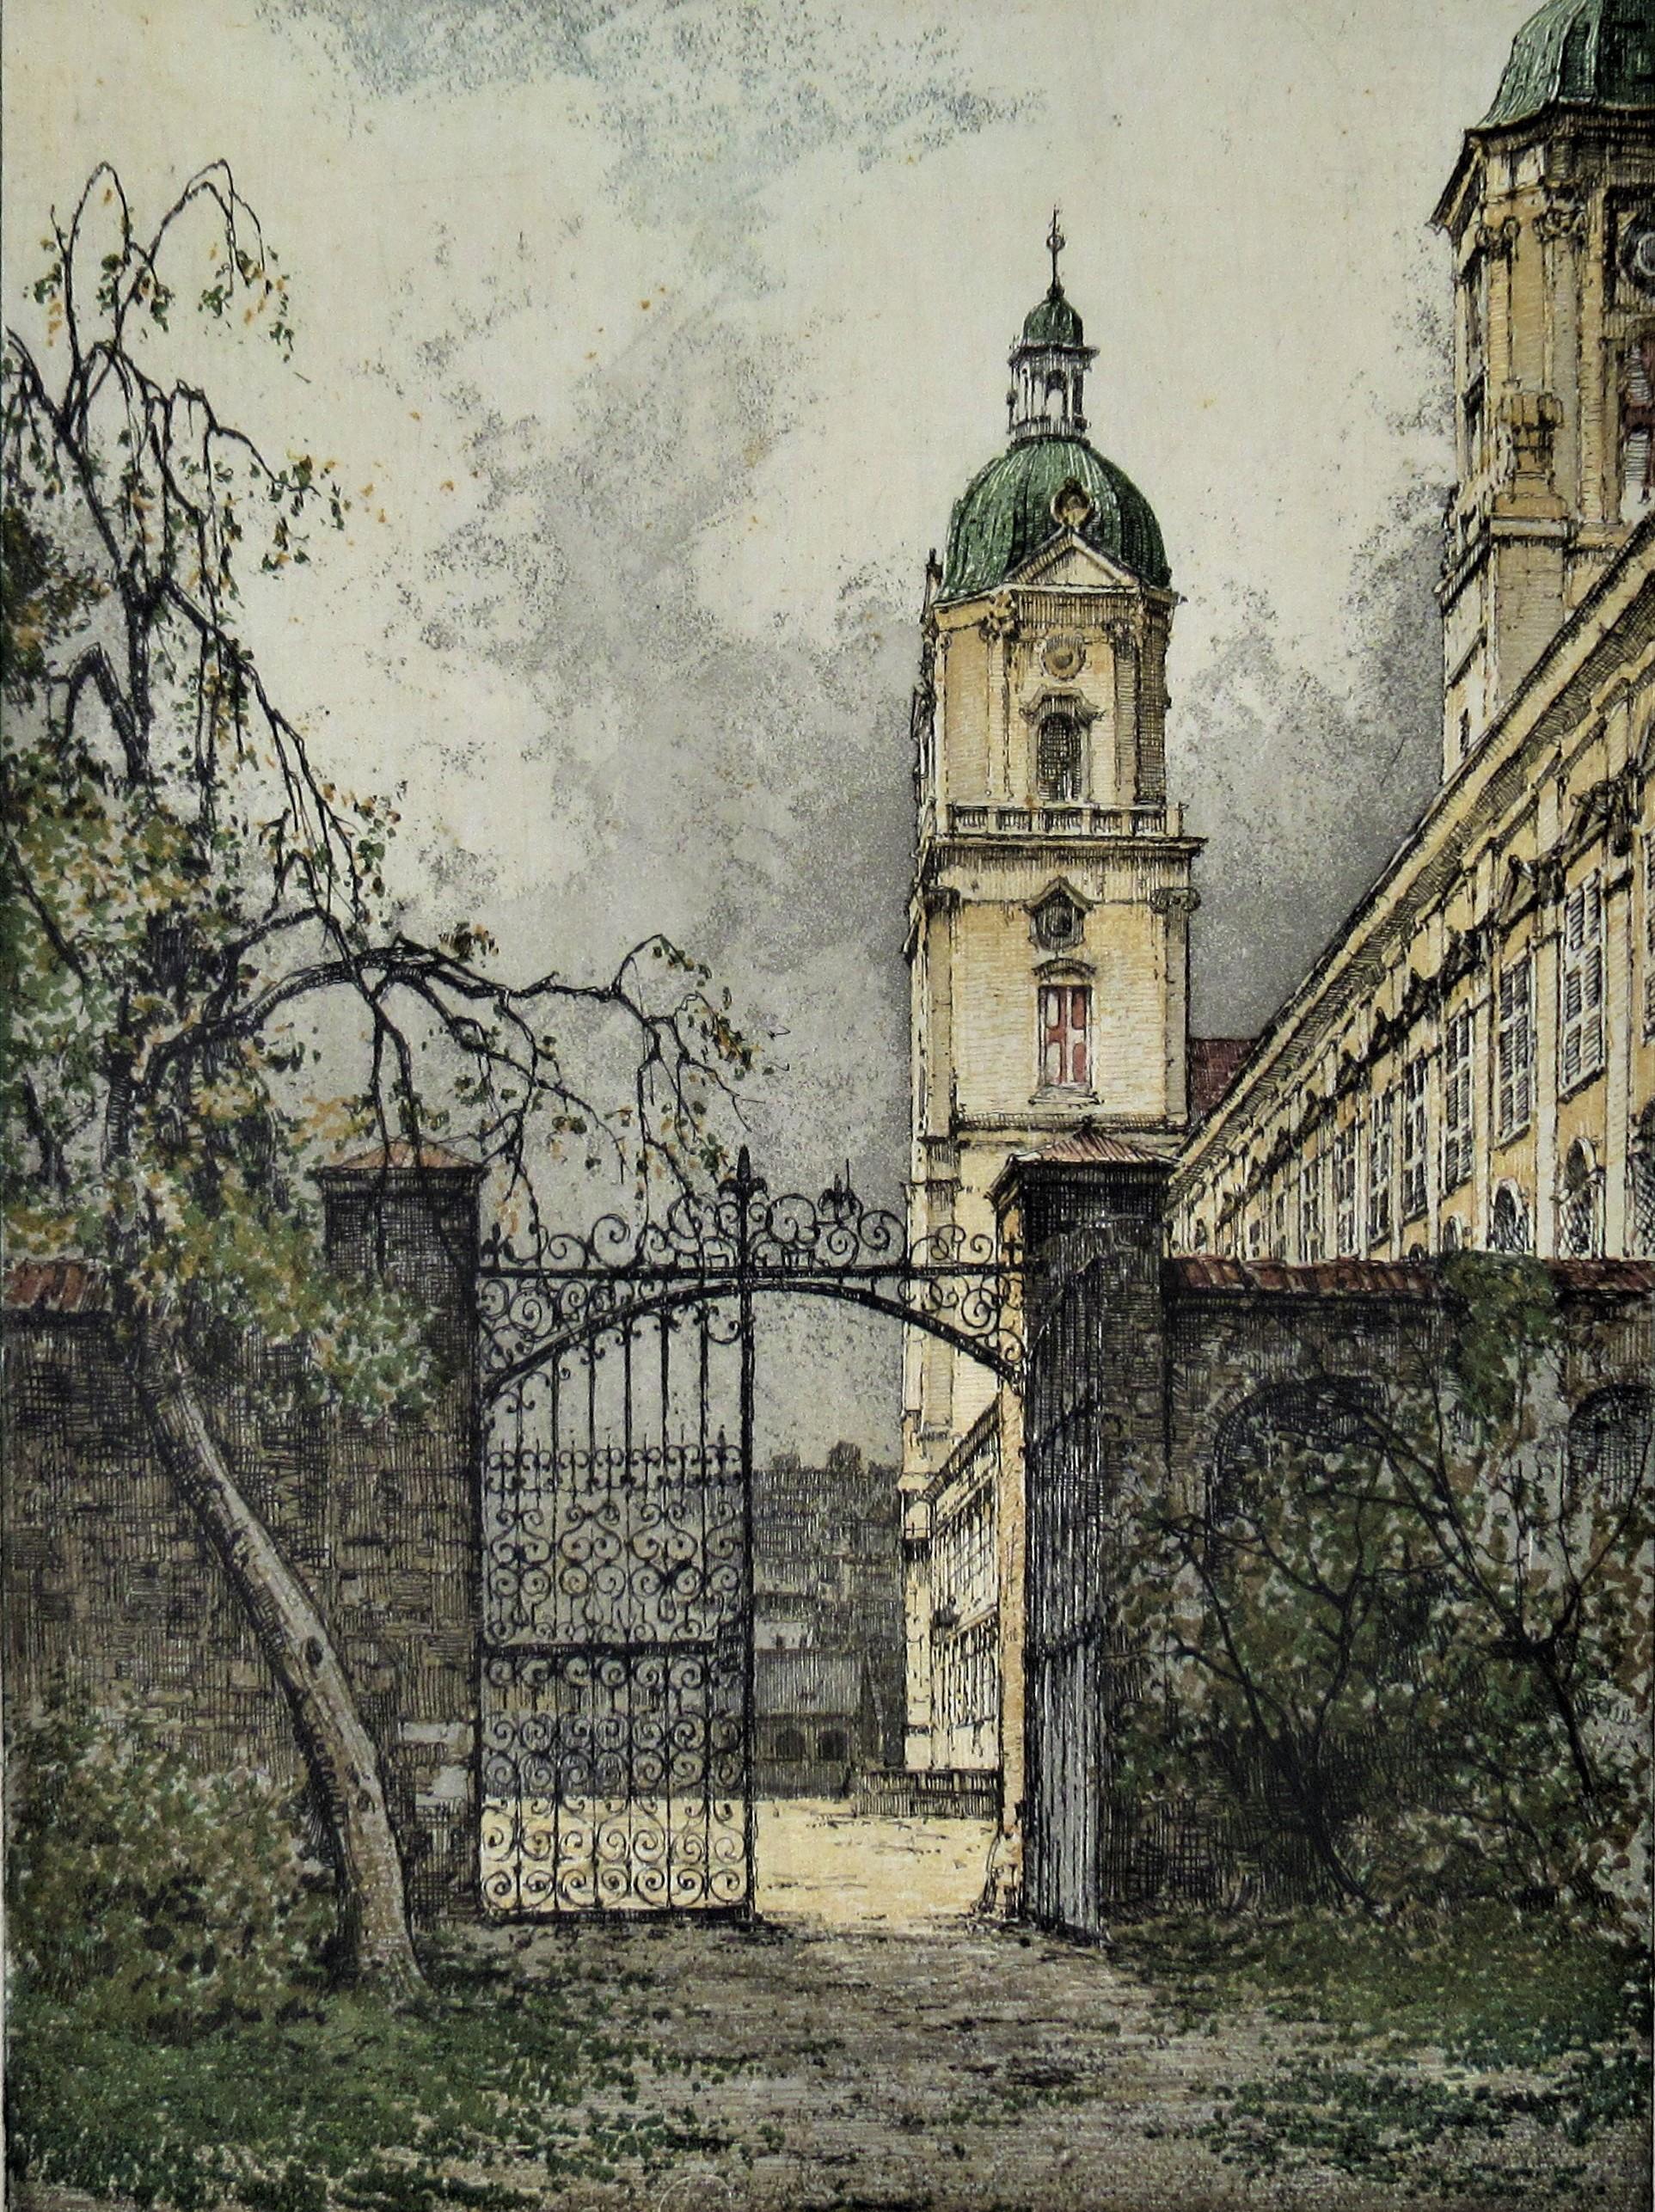 Saint Florian Monastery, Austria - Print by Josef Eidenberger